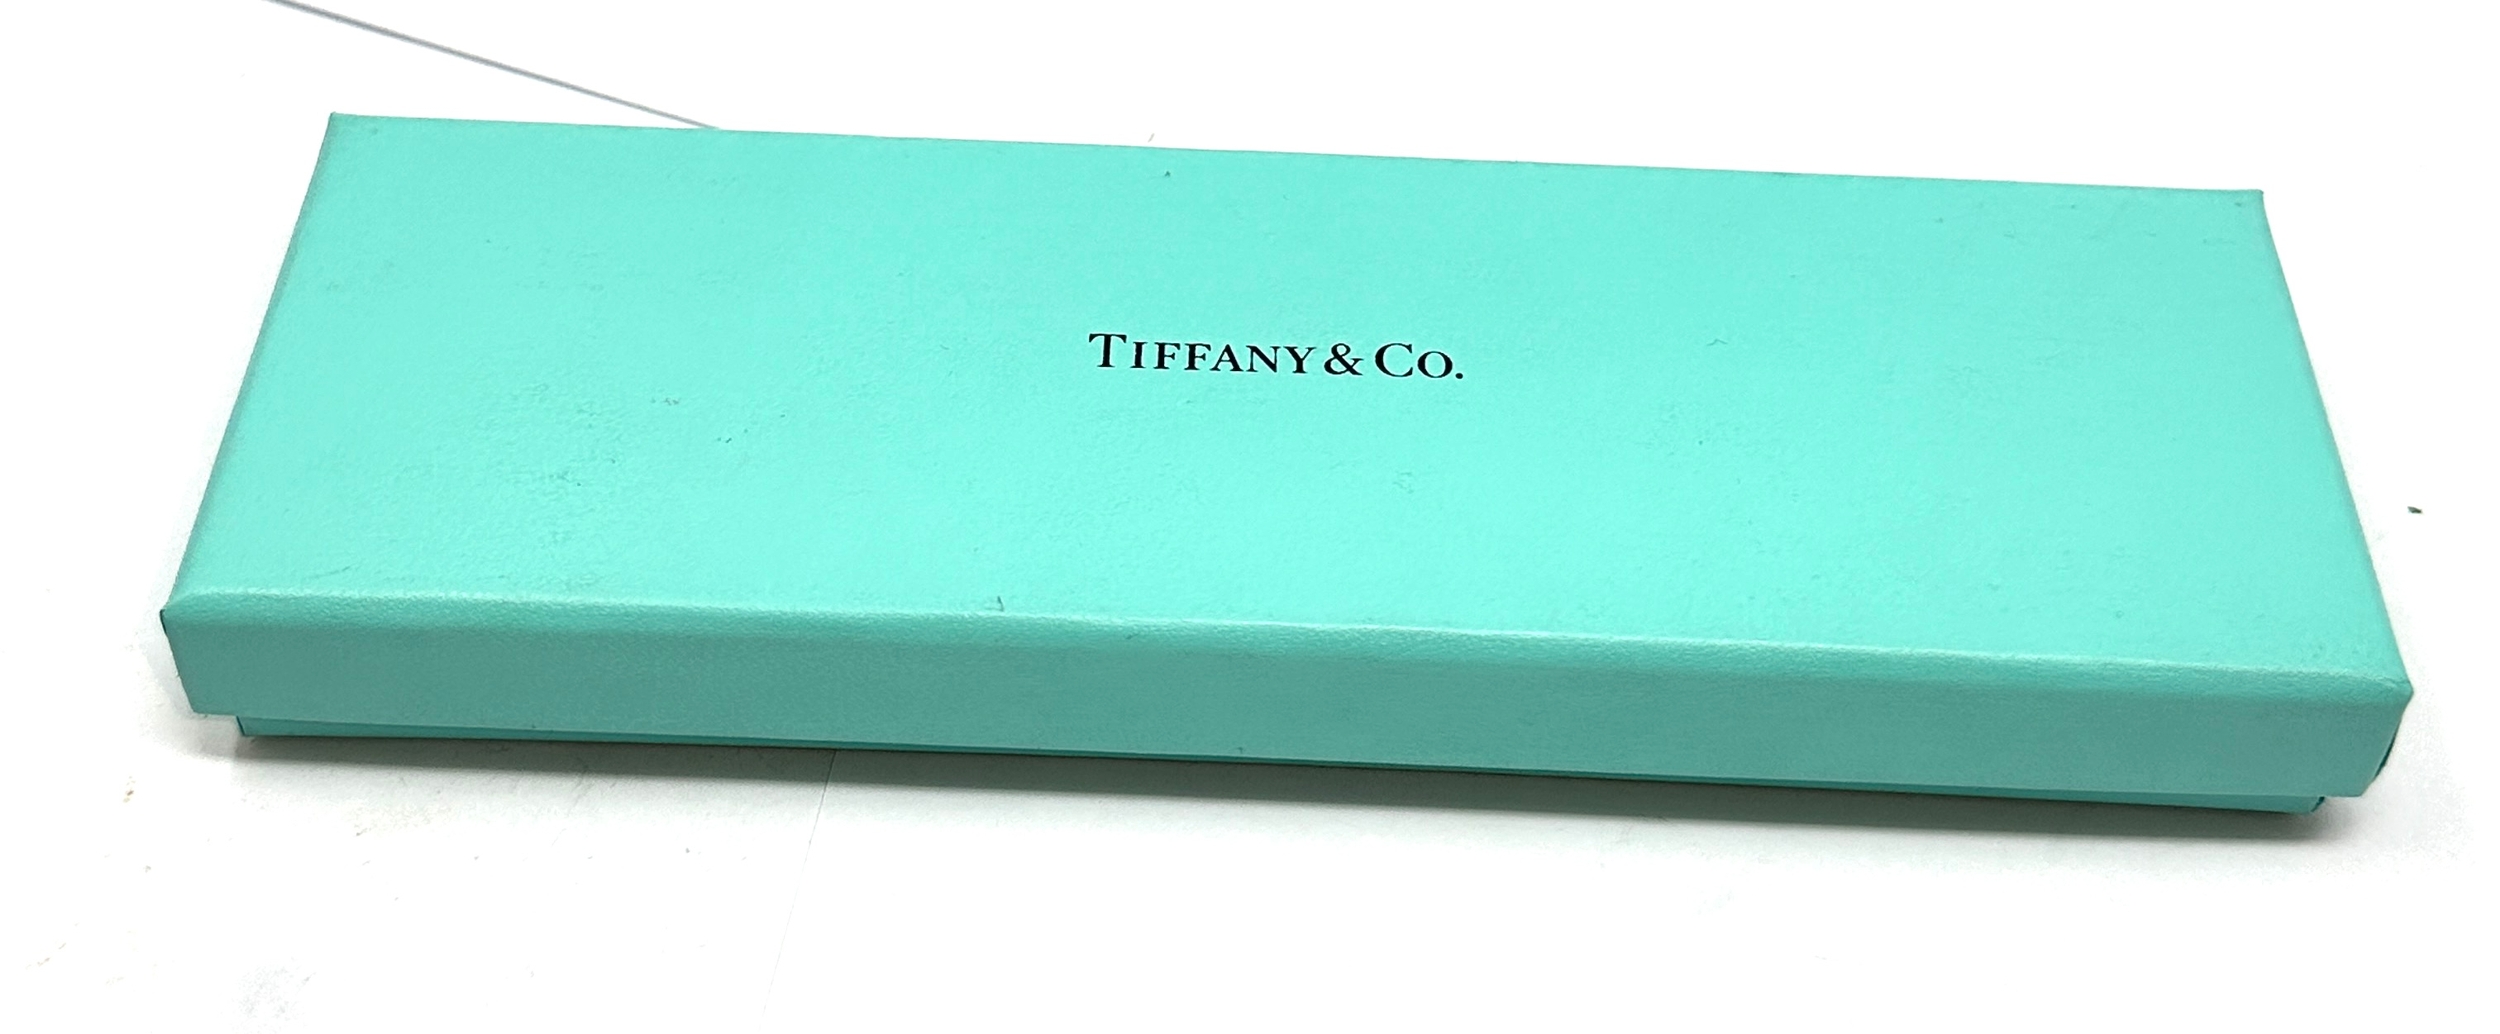 Boxed Tiffany & Co Tiffany Blue Purse Pen - Image 4 of 4